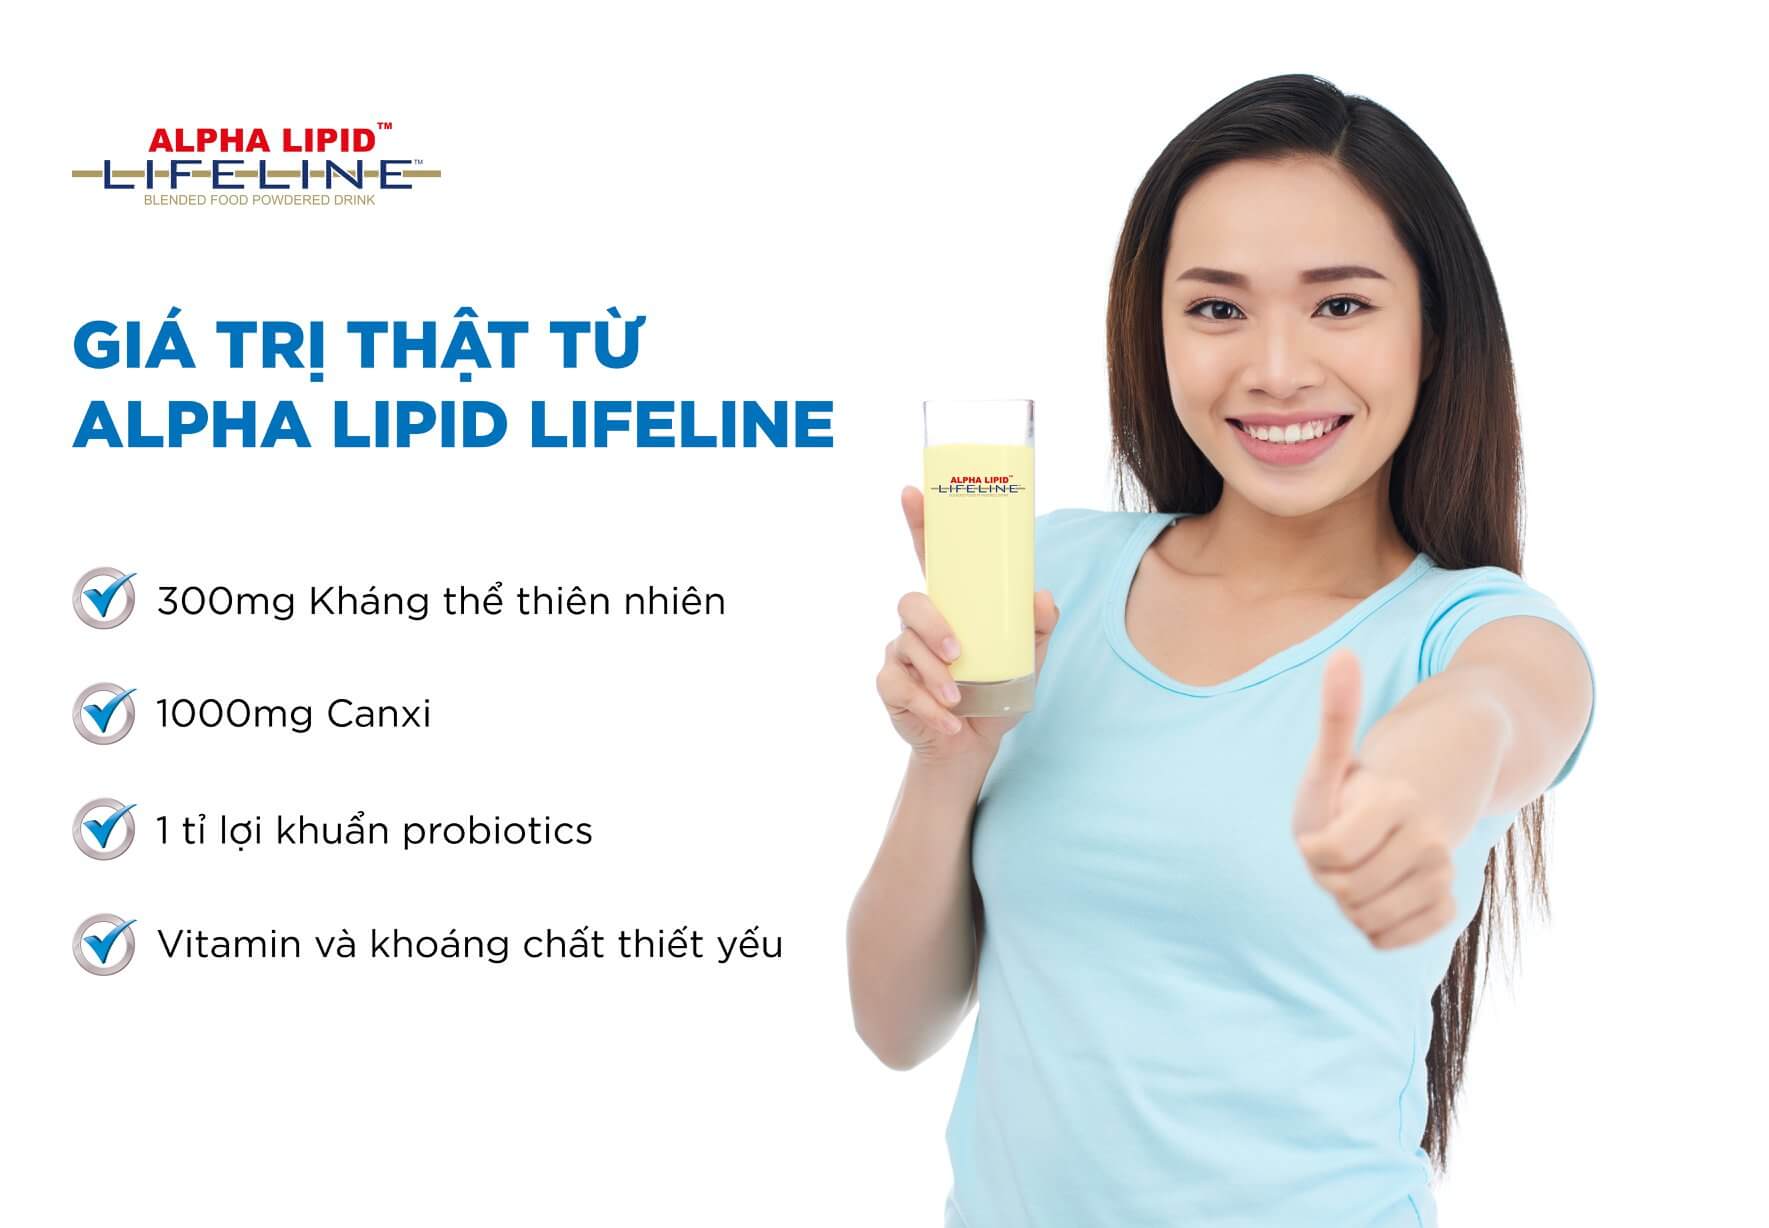 4 giá trị thật từ sữa non Alpha Lipid